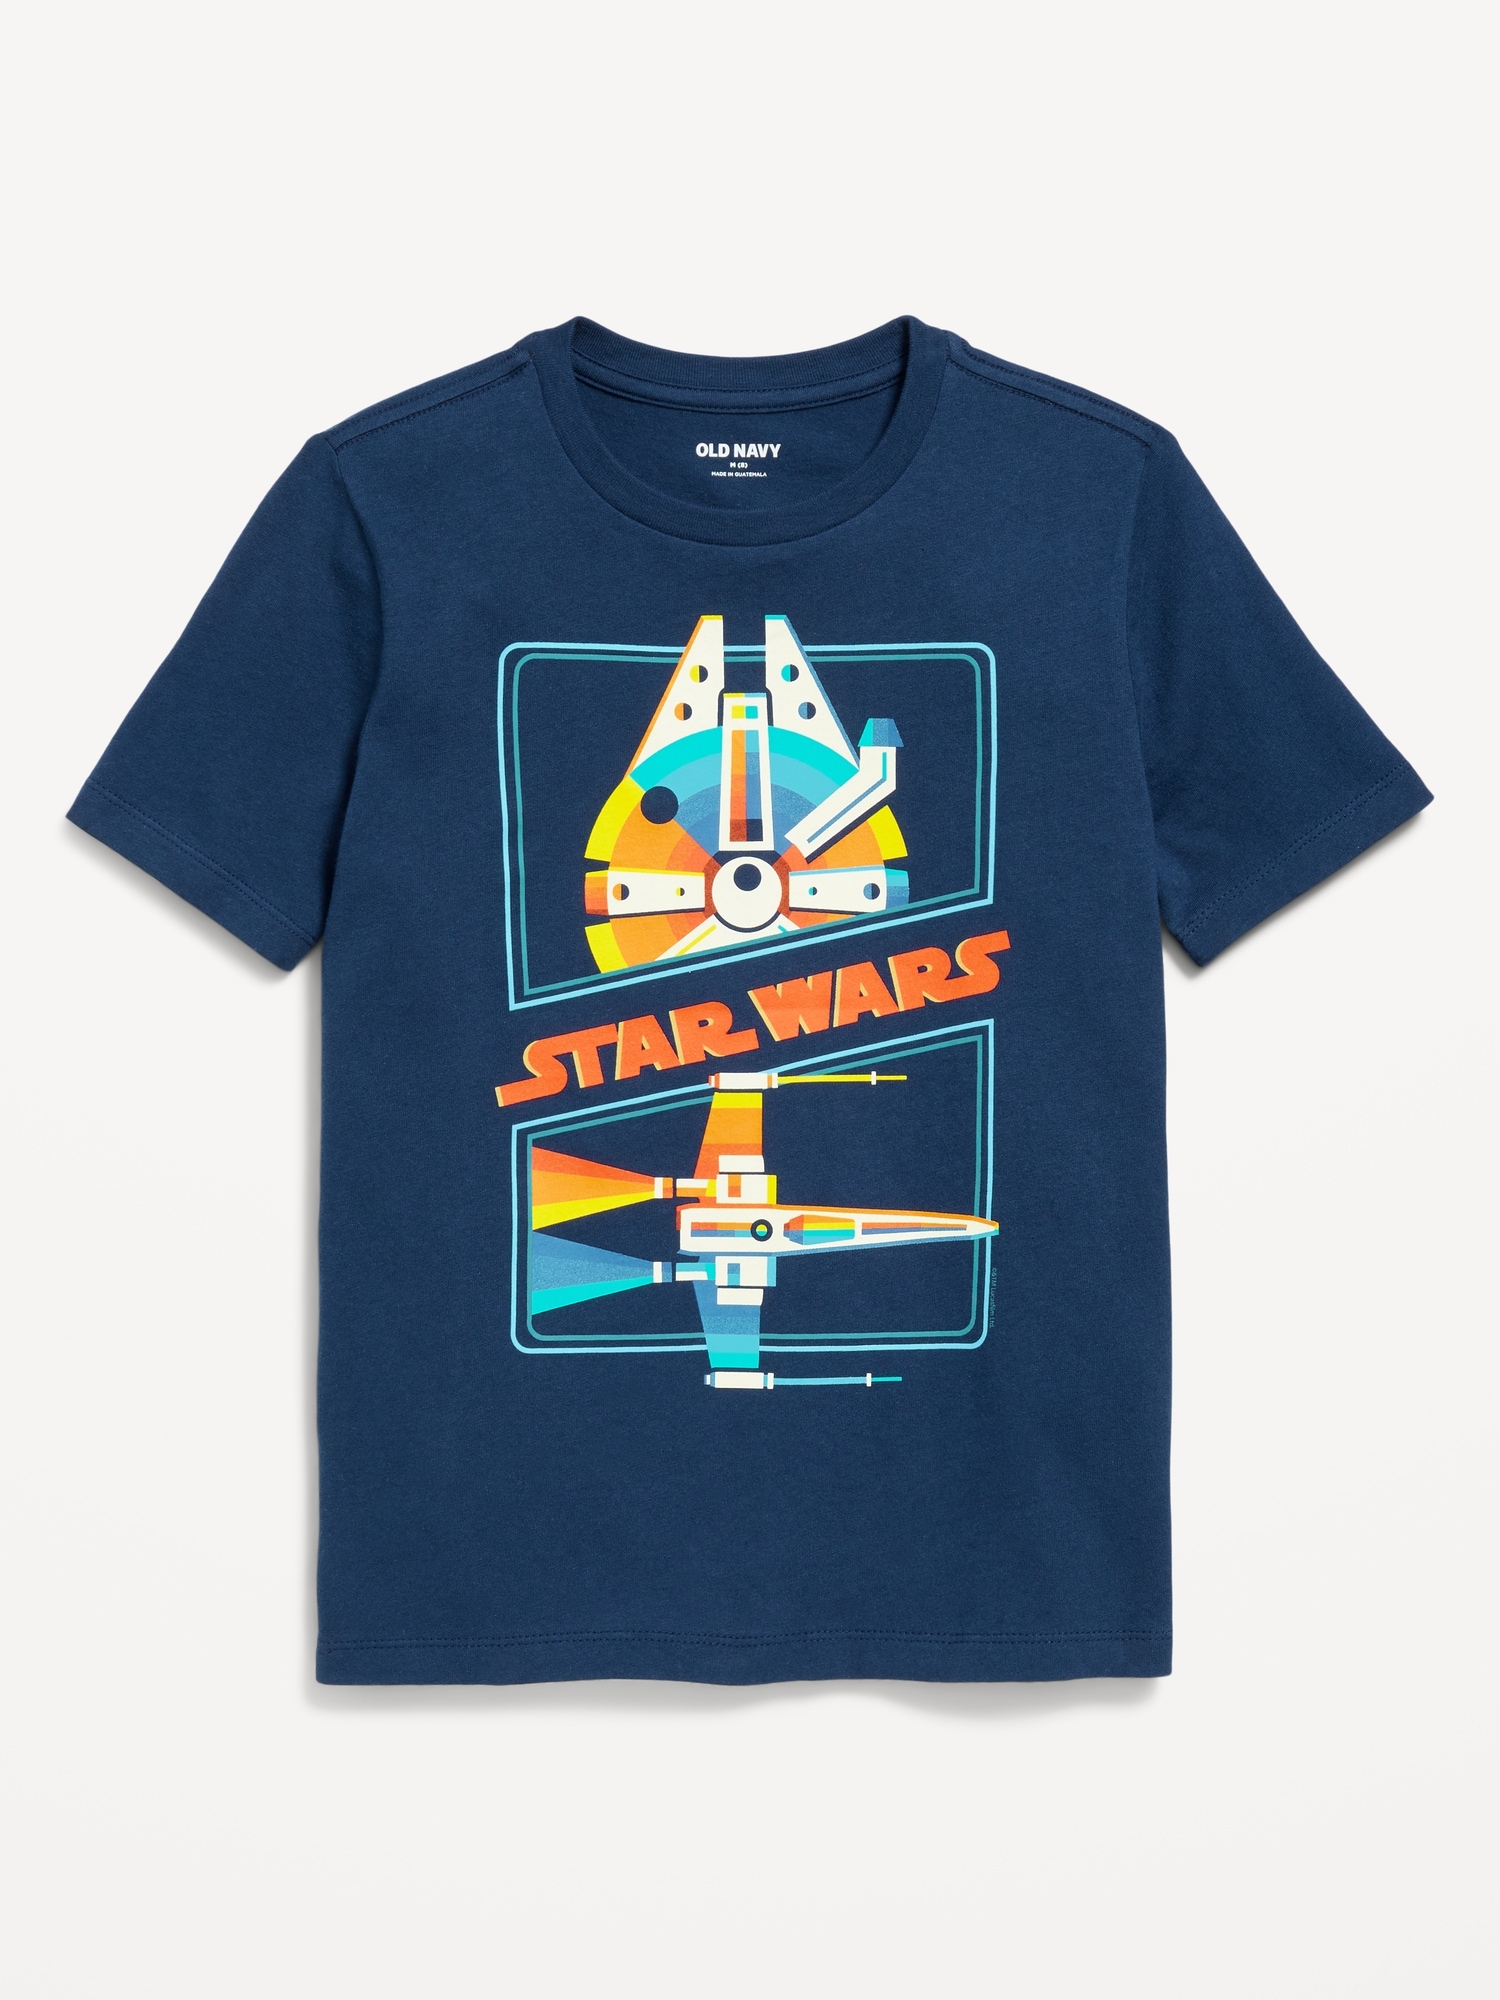 Star Wars Gender-Neutral Graphic T-Shirt for Kids